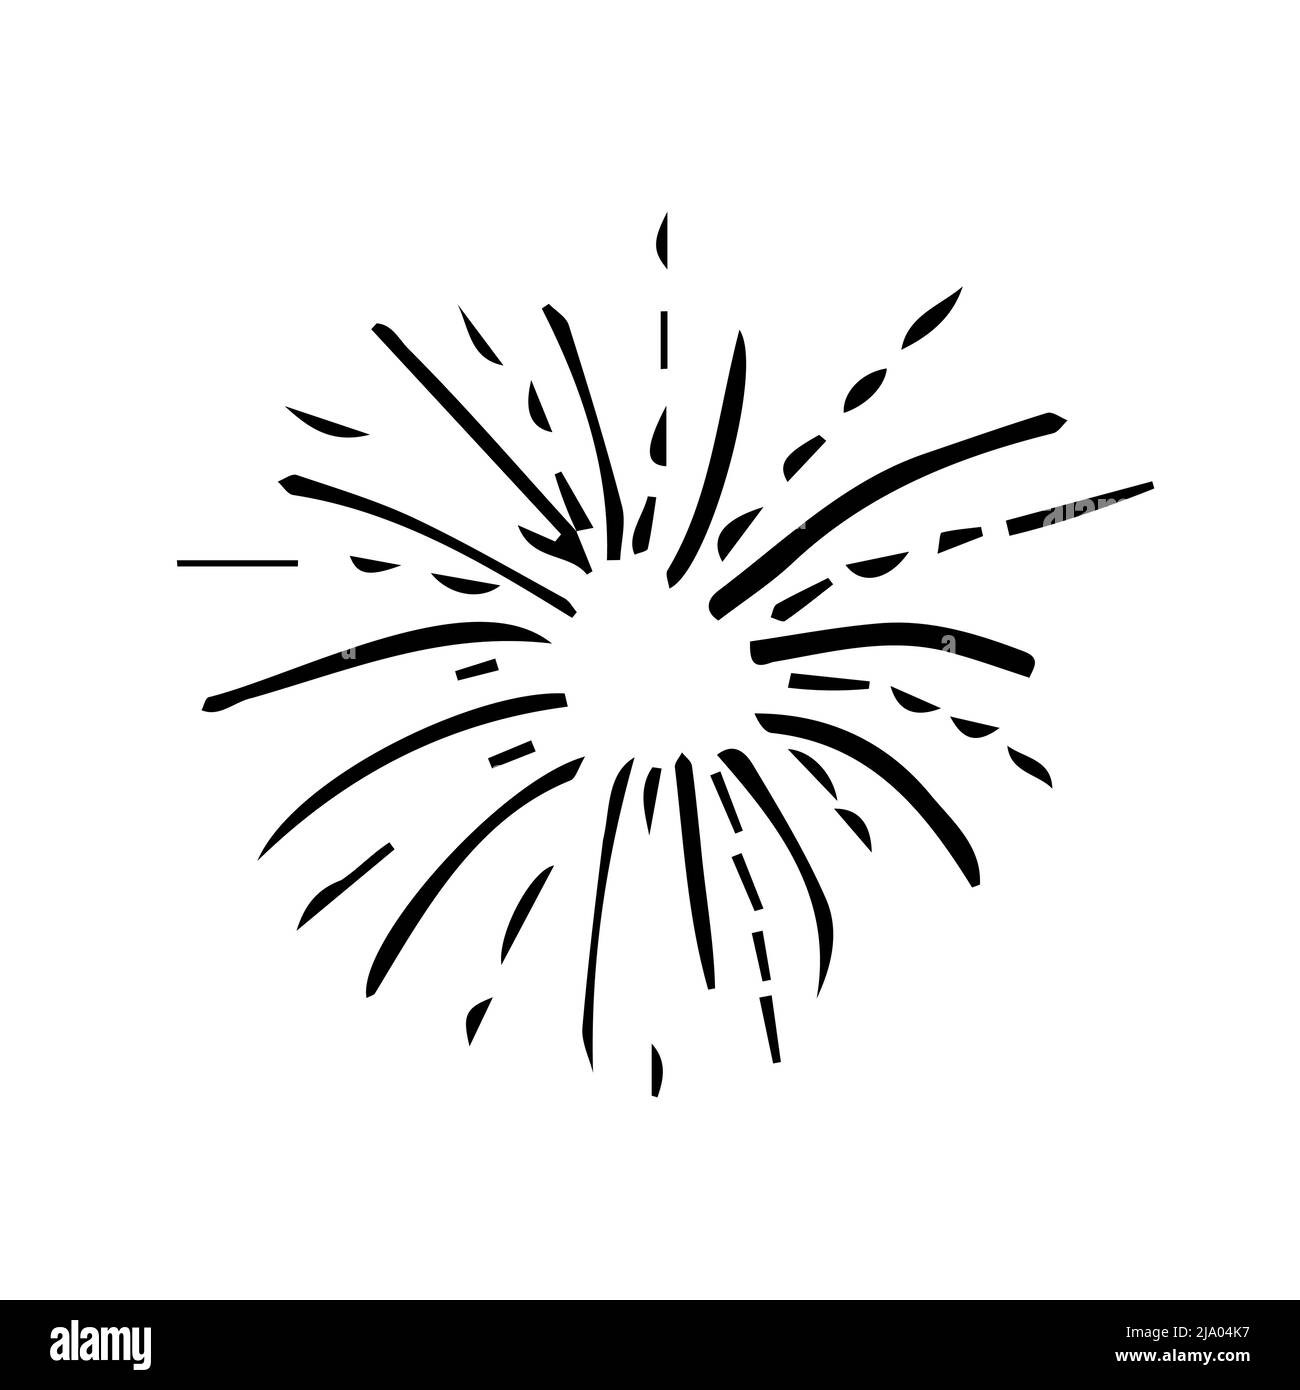 fireworks silhouette vector